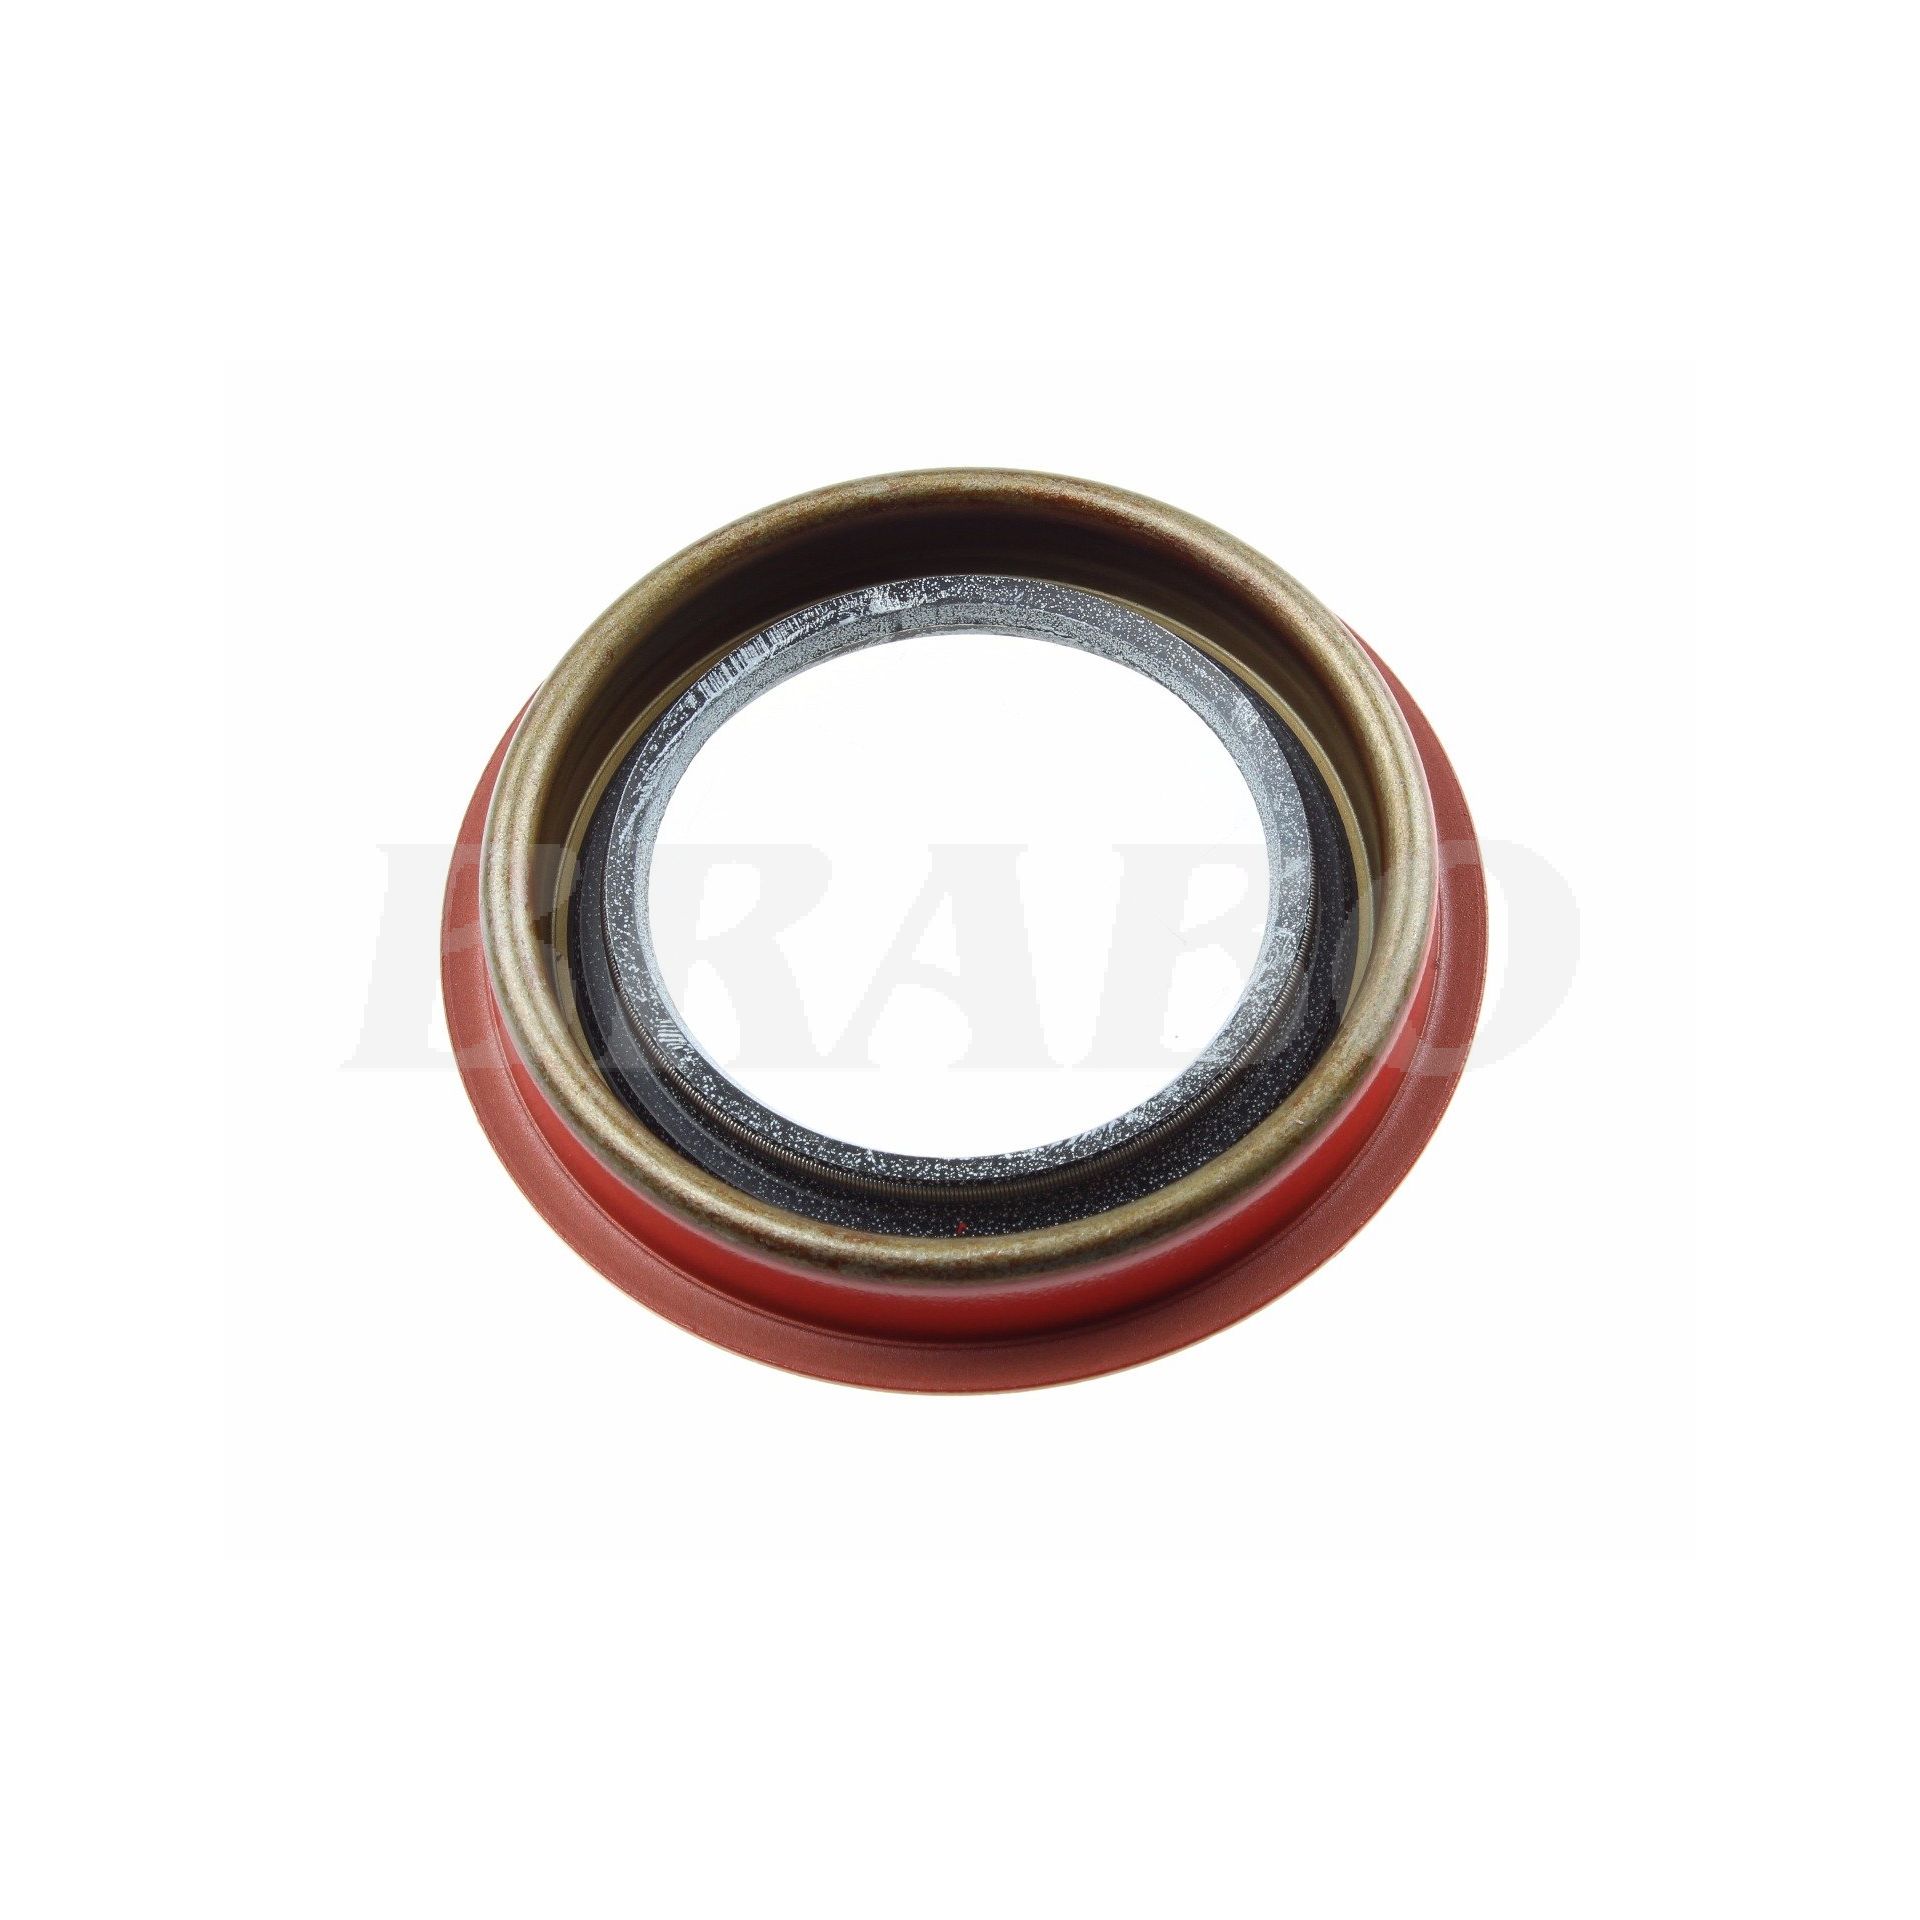 ACDelco 9864S Advantage Crankshaft Front Oil Seal 